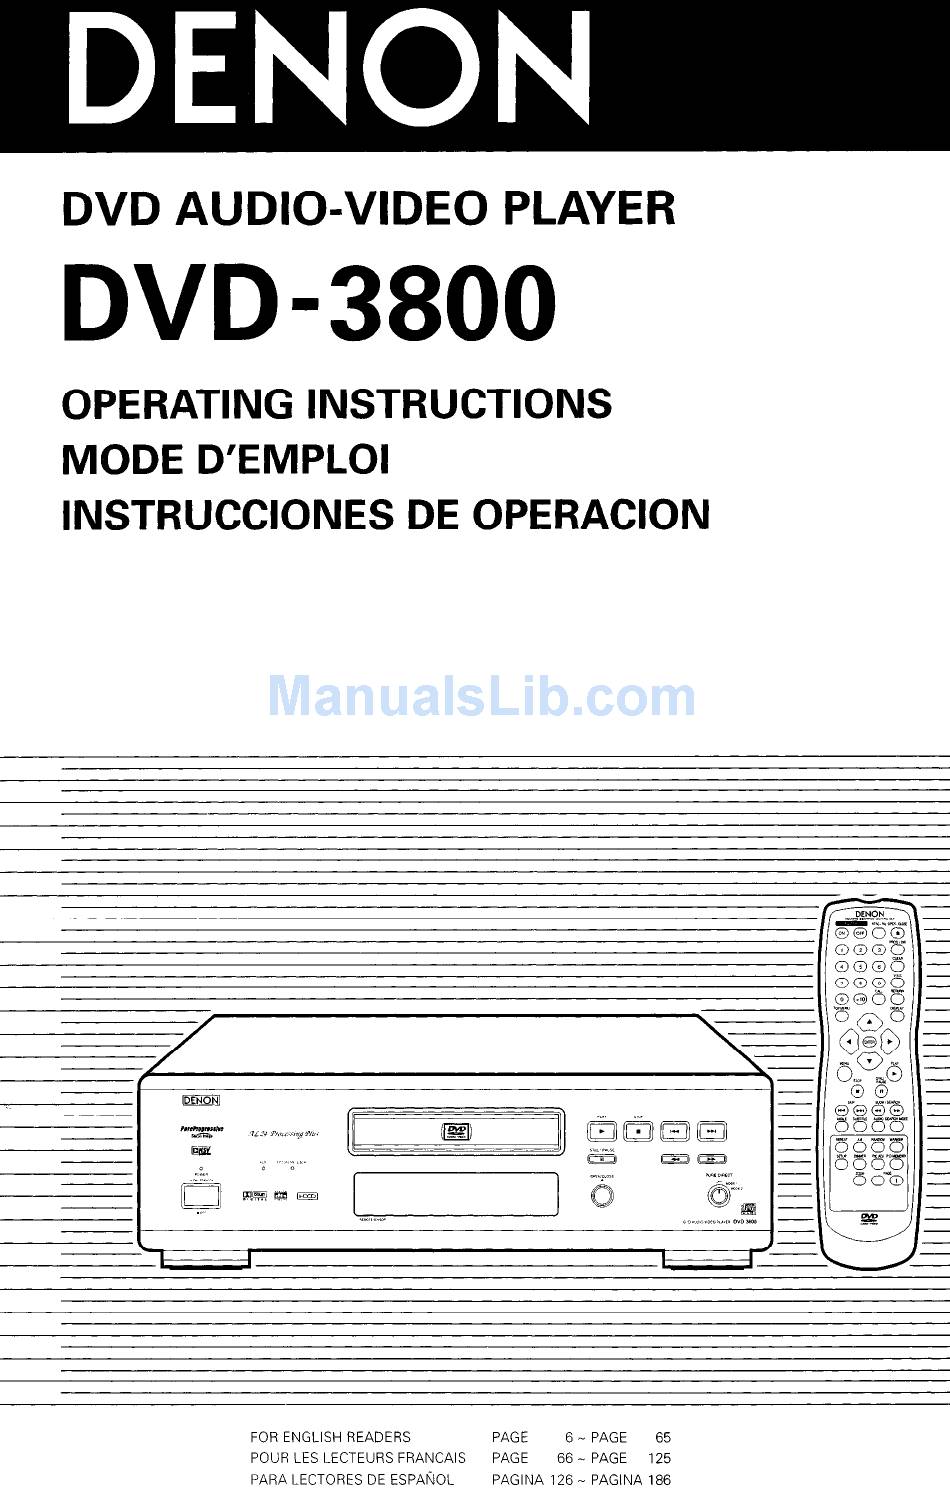 Denon Dvd 3800 Operating Instructions Manual Pdf Download Manualslib